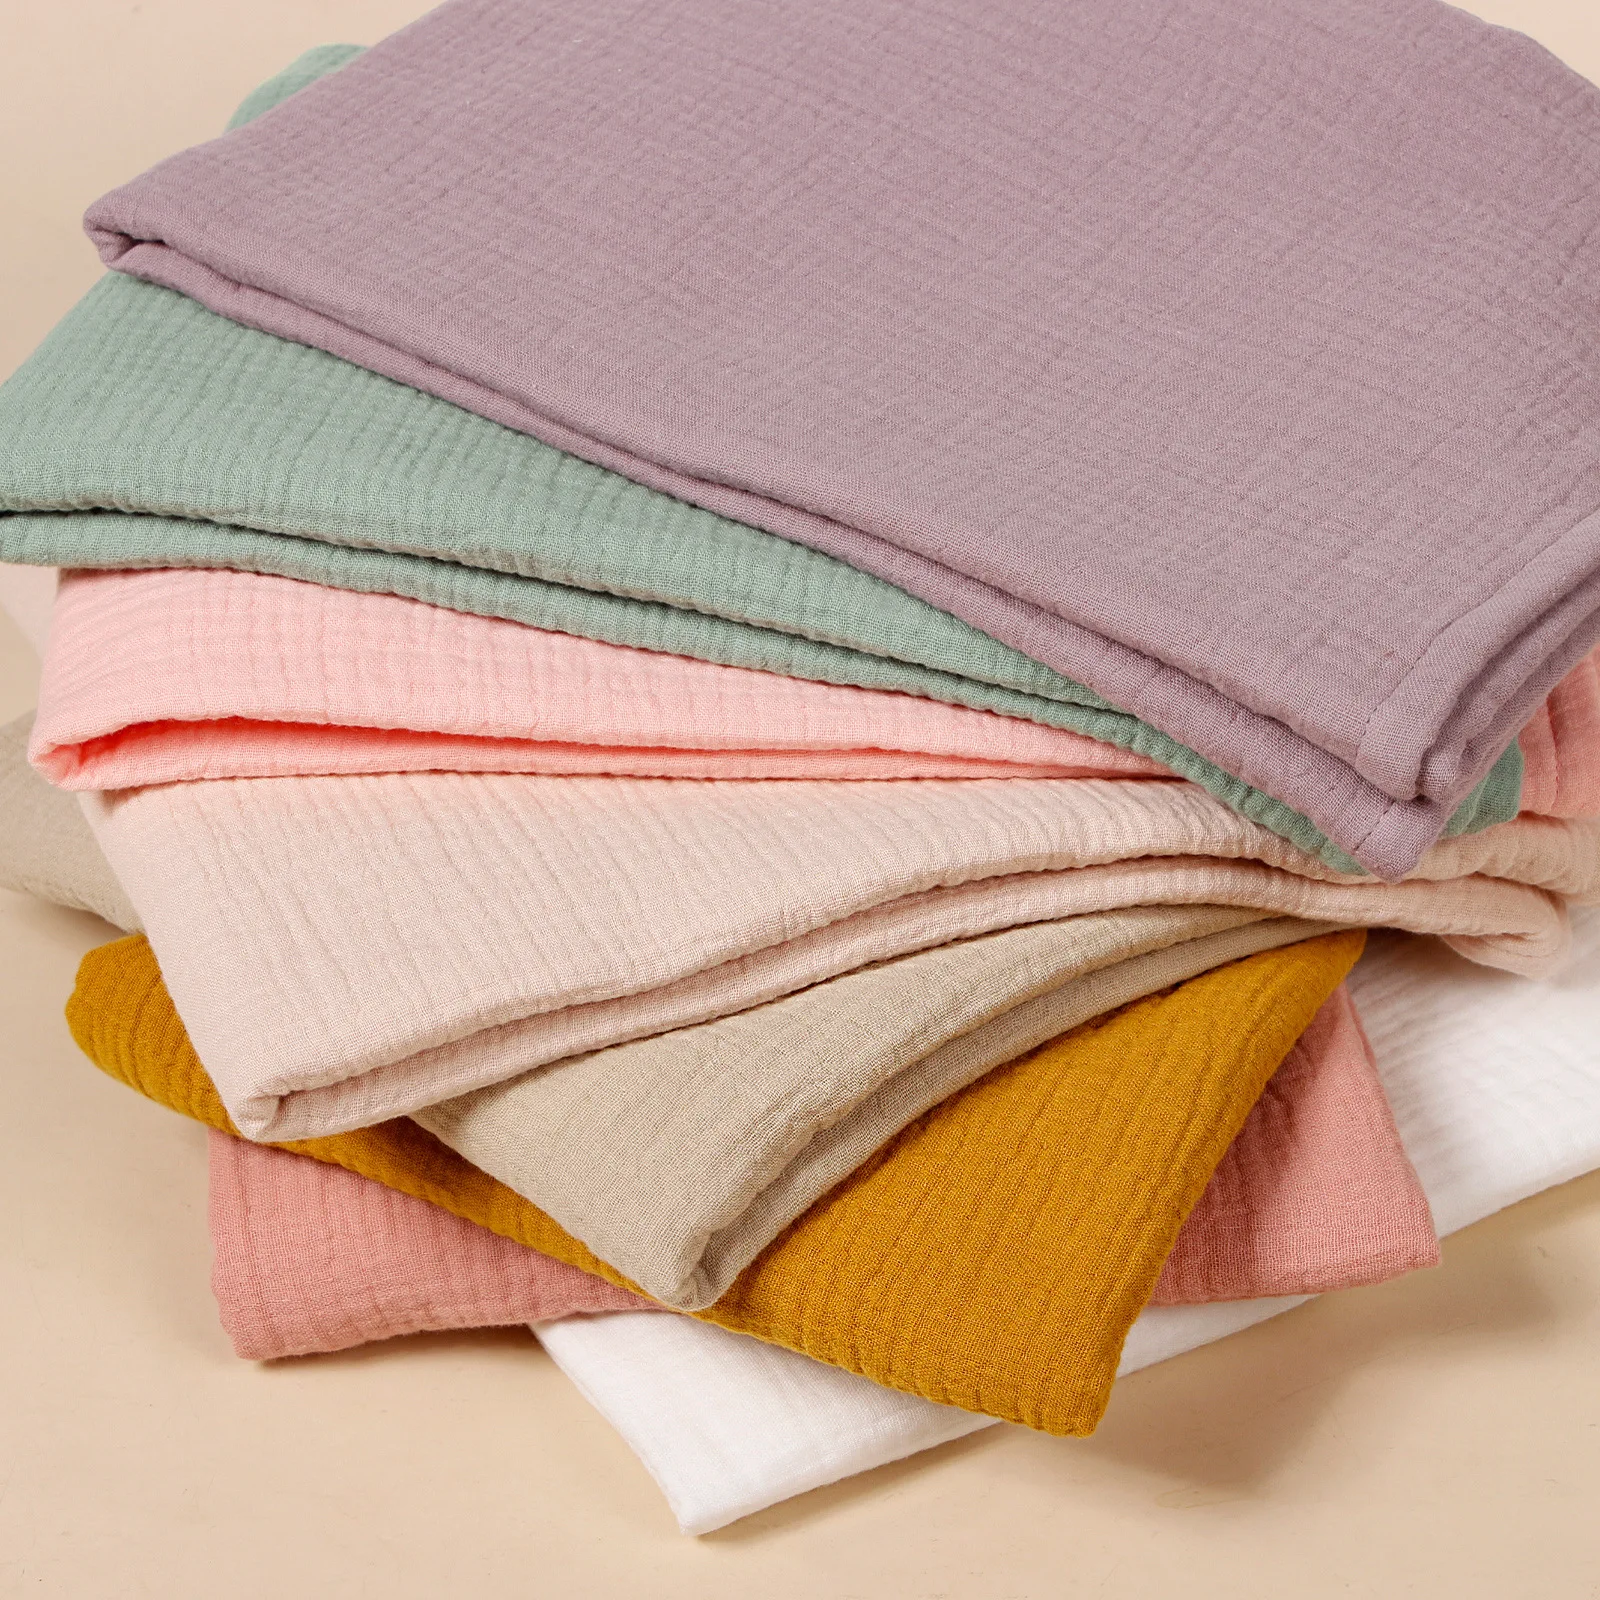 Muslin Swaddle Blanket Soft Breathable Cotton Baby Receiving Blanket Muslin Swaddling Wrap Neutral Receiving Blanket for Newborn